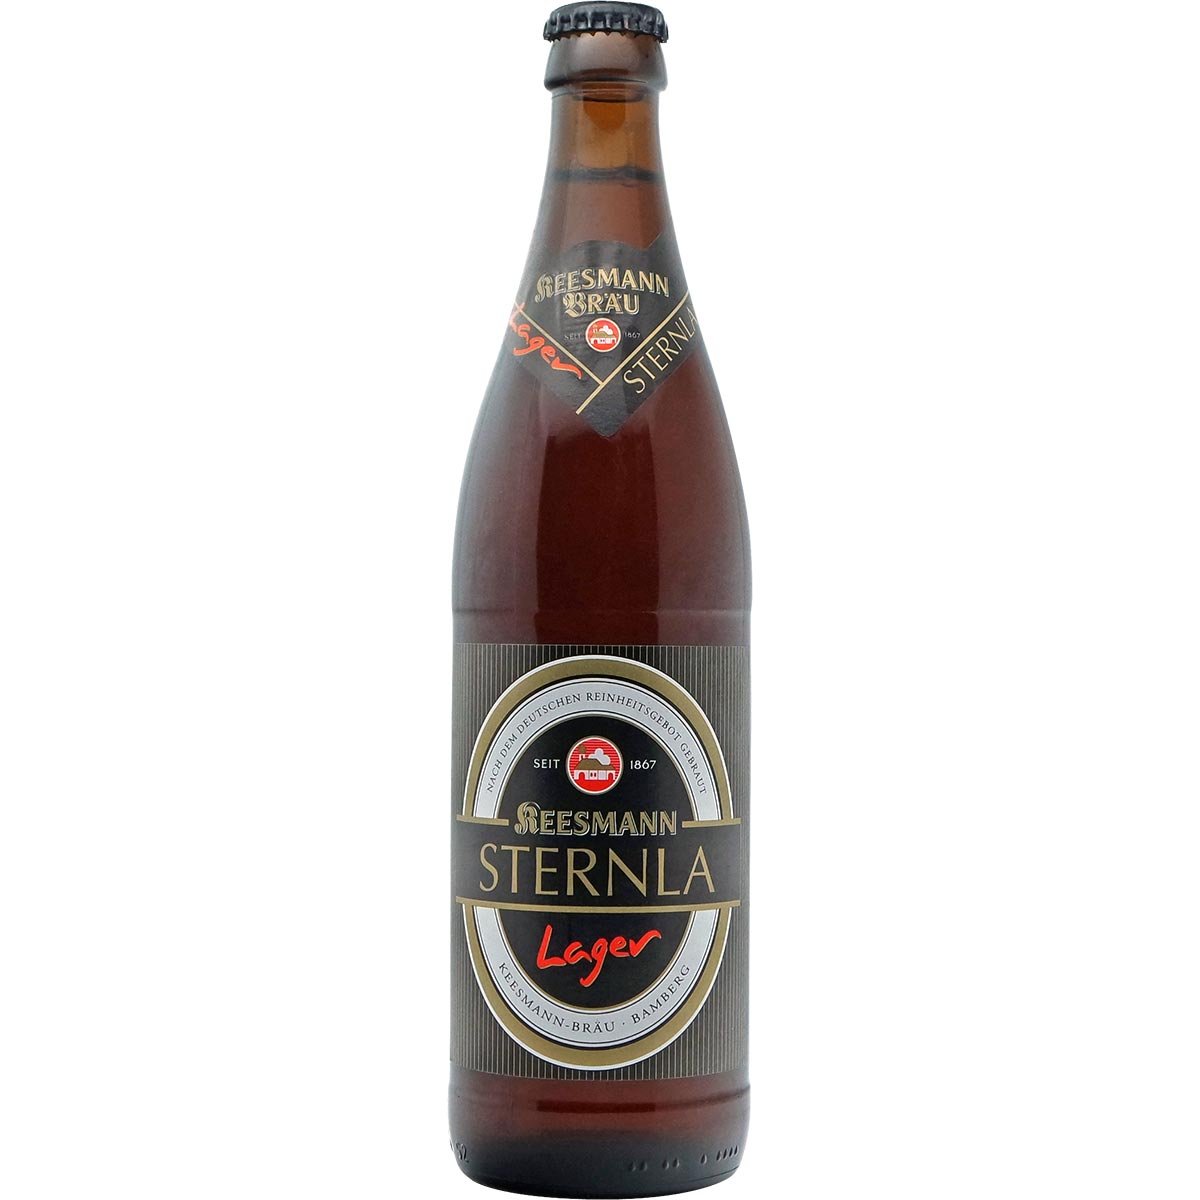 Brauerei Keesmann Bamberg Sternla Lager kaufen